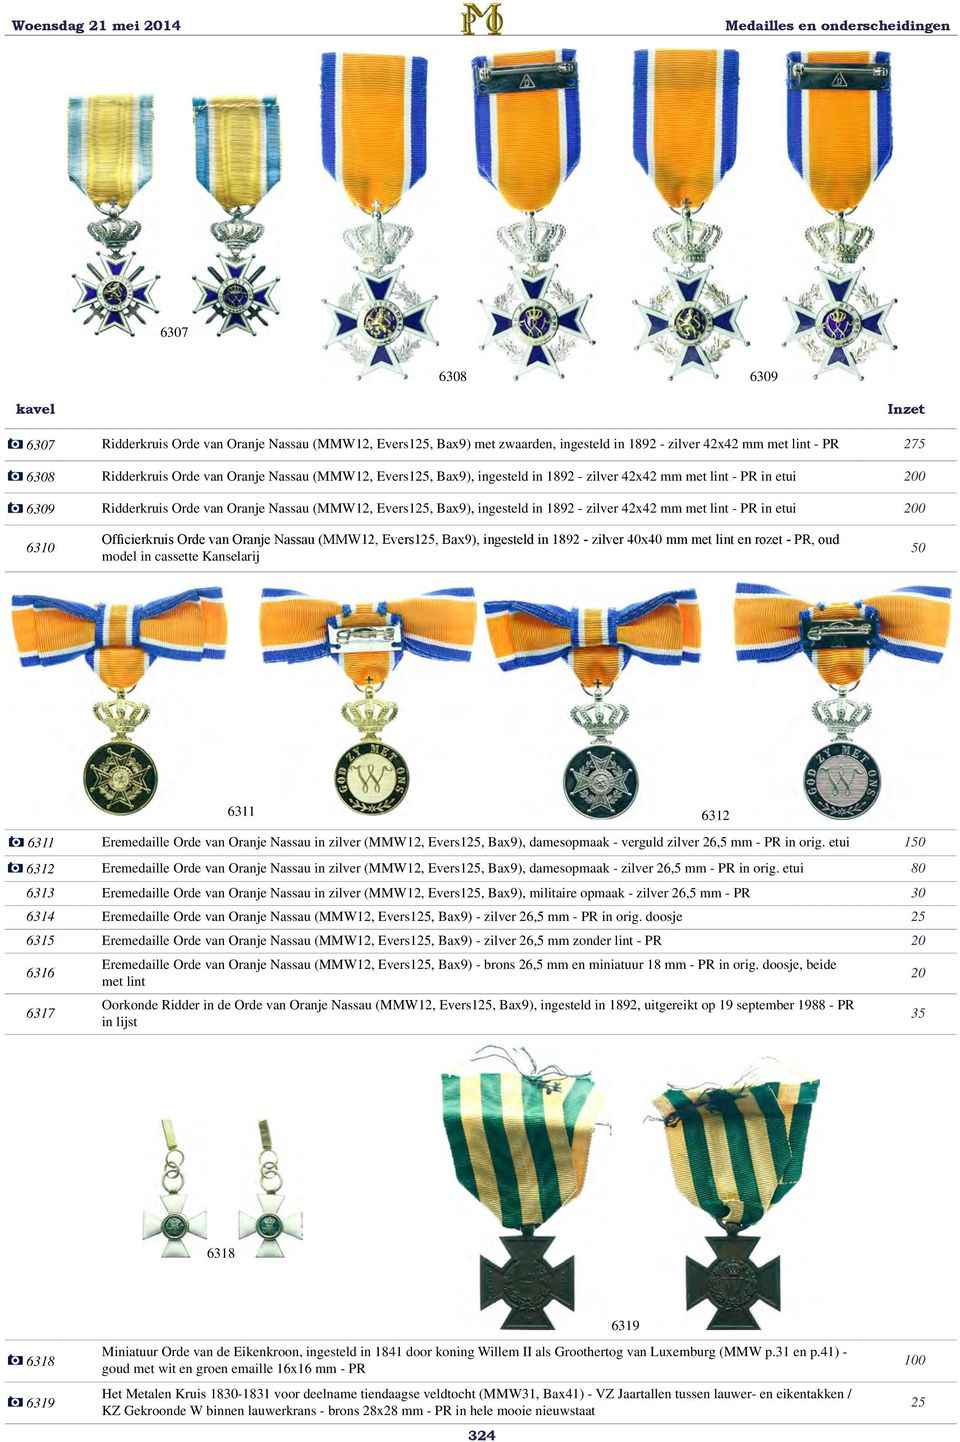 etui 200 6310 Officierkruis Orde van Oranje Nassau (MMW12, Evers125, Bax9), ingesteld in 1892 - zilver 40x40 mm met lint en rozet - PR, oud model in cassette Kanselarij 6311 6312 6311 Eremedaille